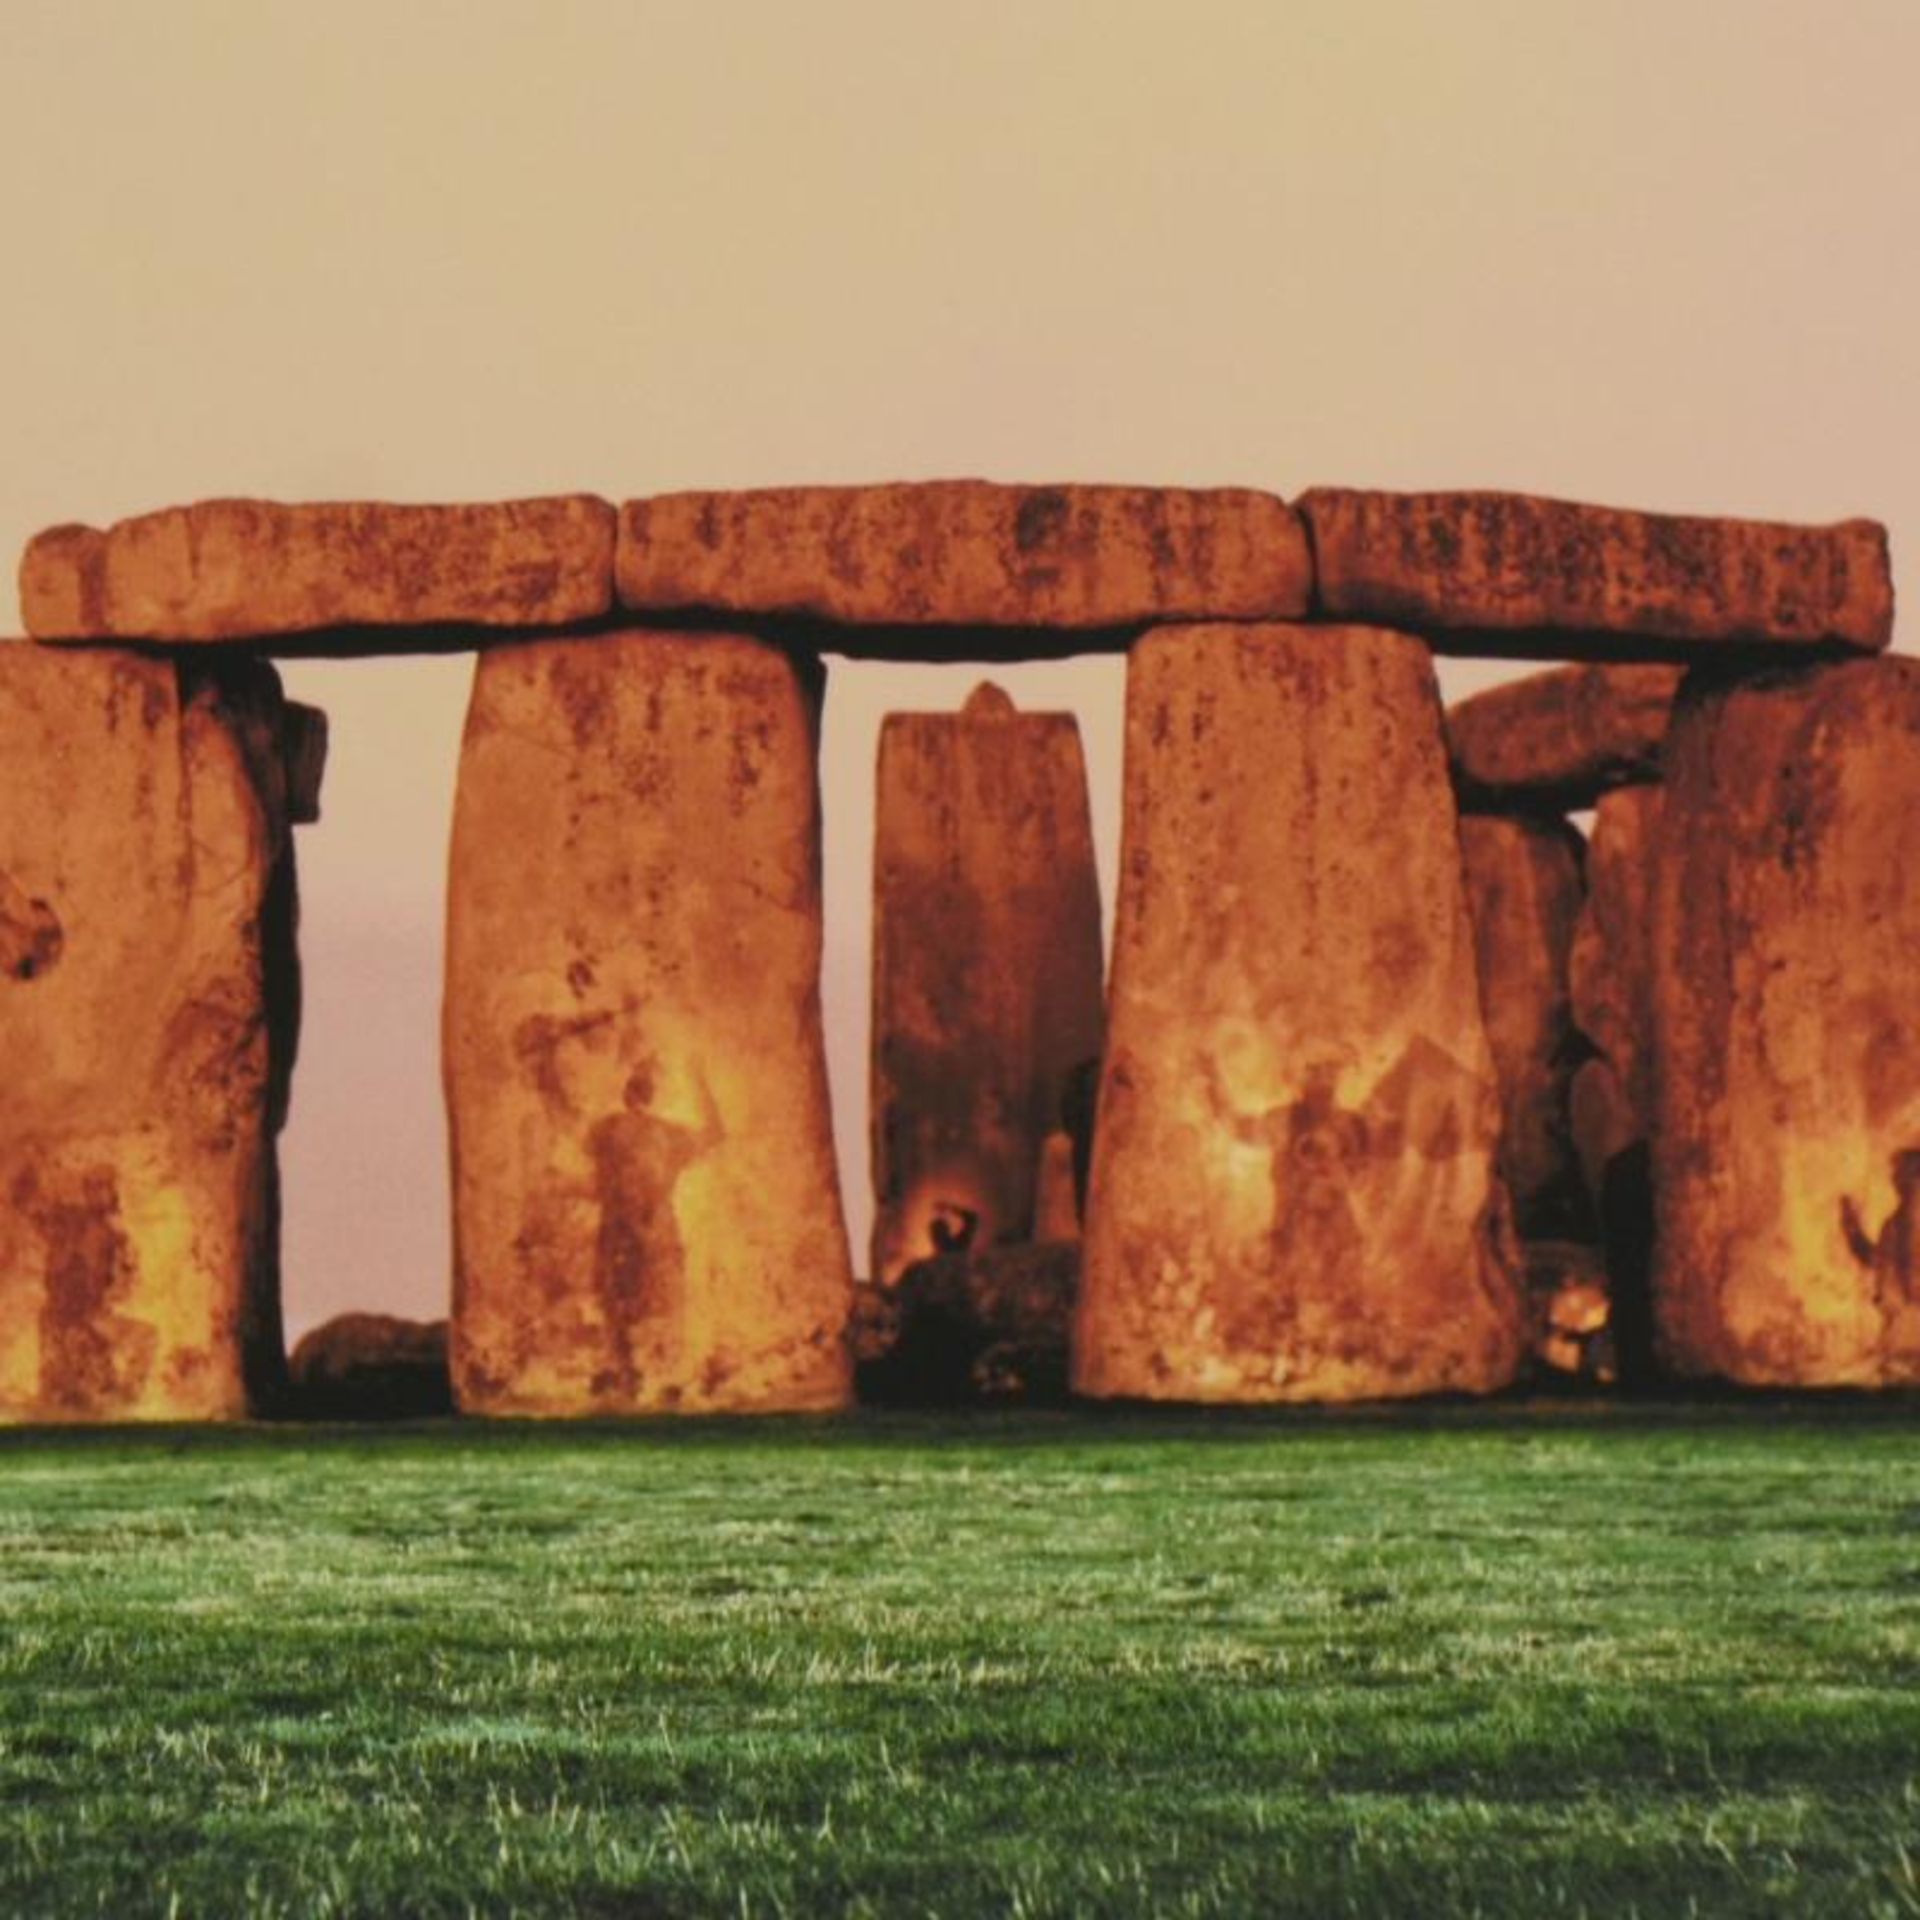 Robert Sheer, "Spirits of Stonehenge" Limited Edition Single Exposure Photograph - Image 2 of 2